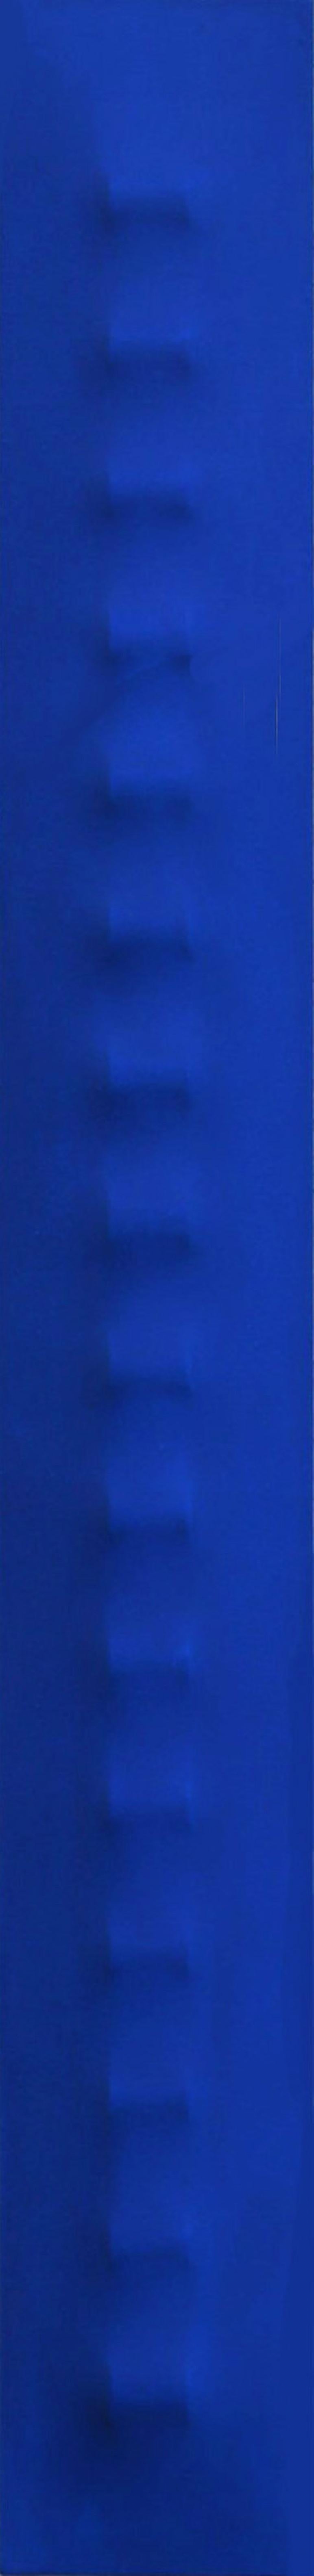 Len Klikunas Abstract Painting - Slims CNB - Three-dimensional Minimalist Blue Abstract Wall Painting